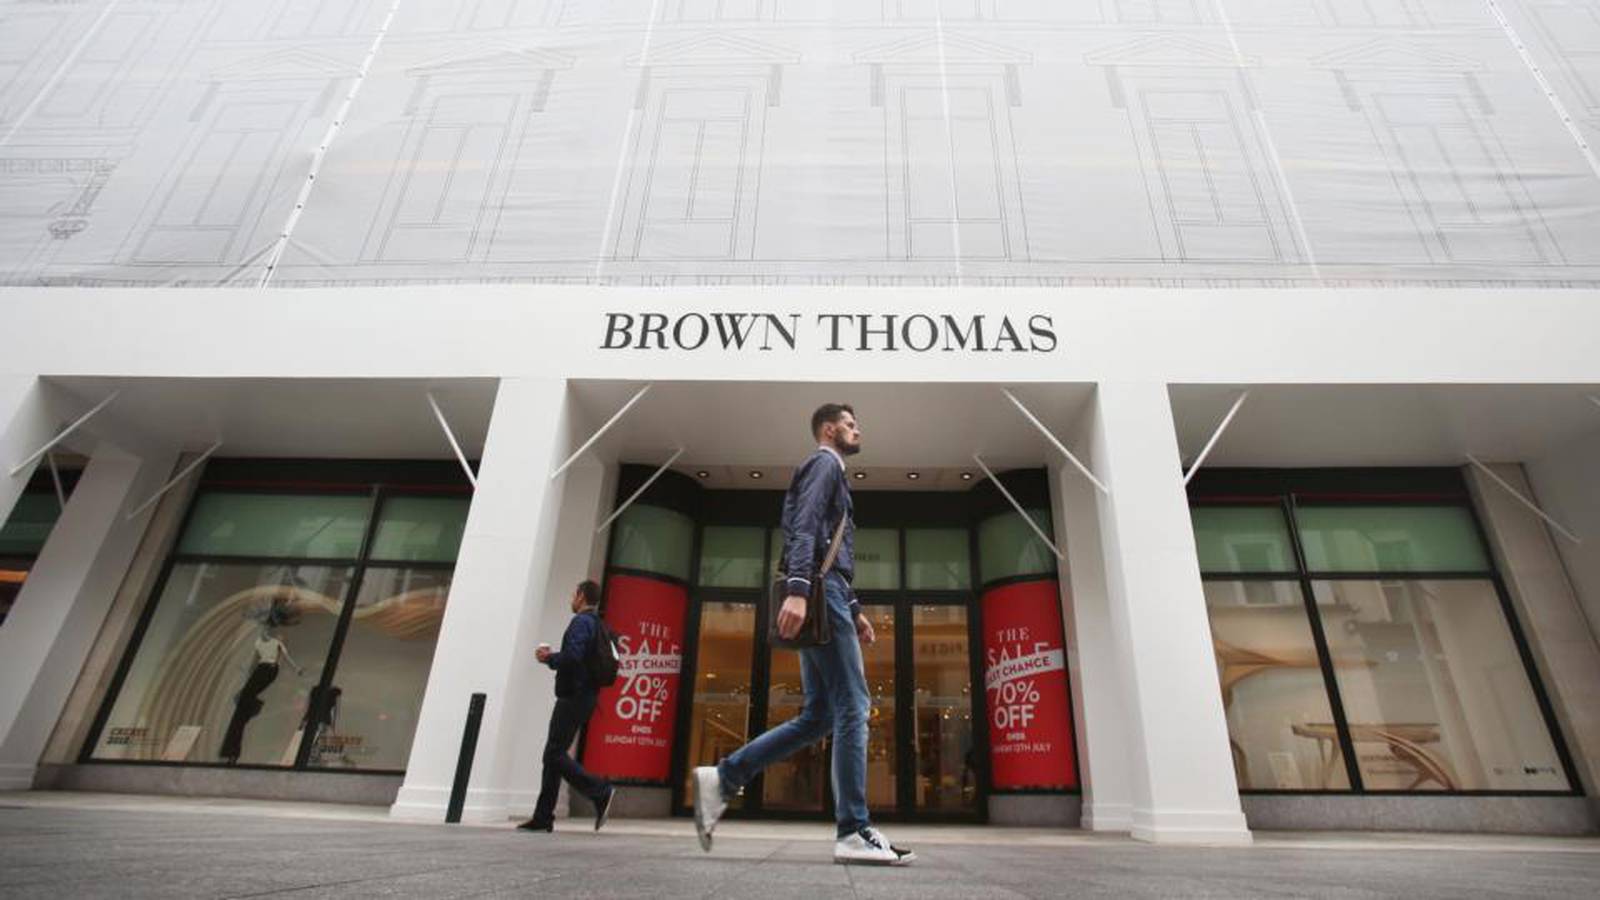 Brown Thomas, Dublin - Phase 2 refurbishment now opened